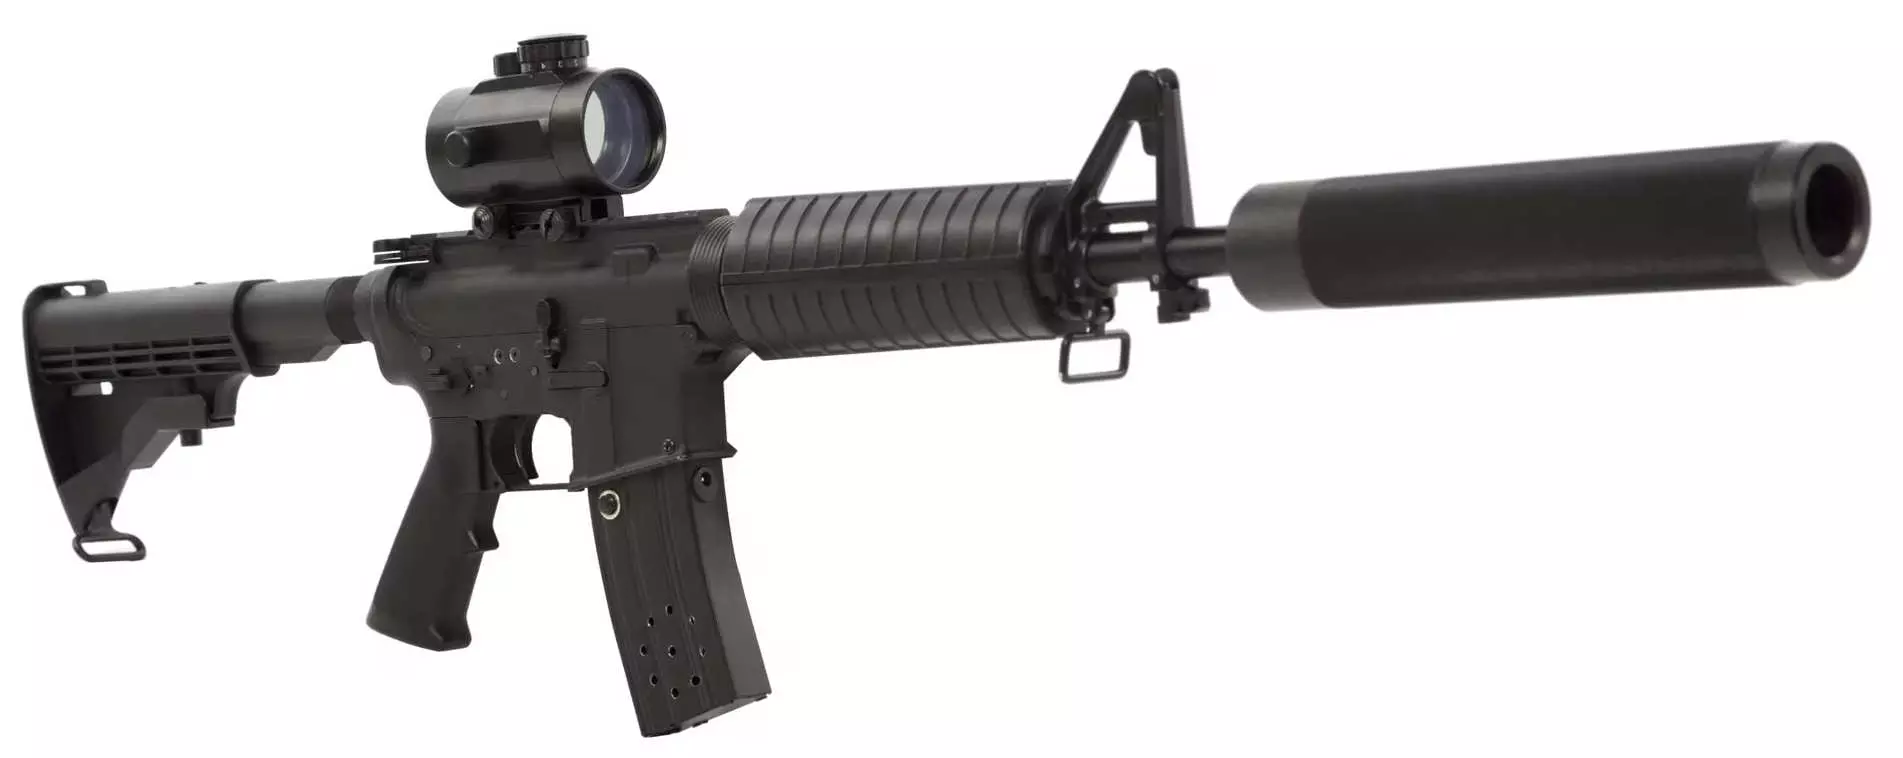 Skat M4 laser tag gun with red dot sight